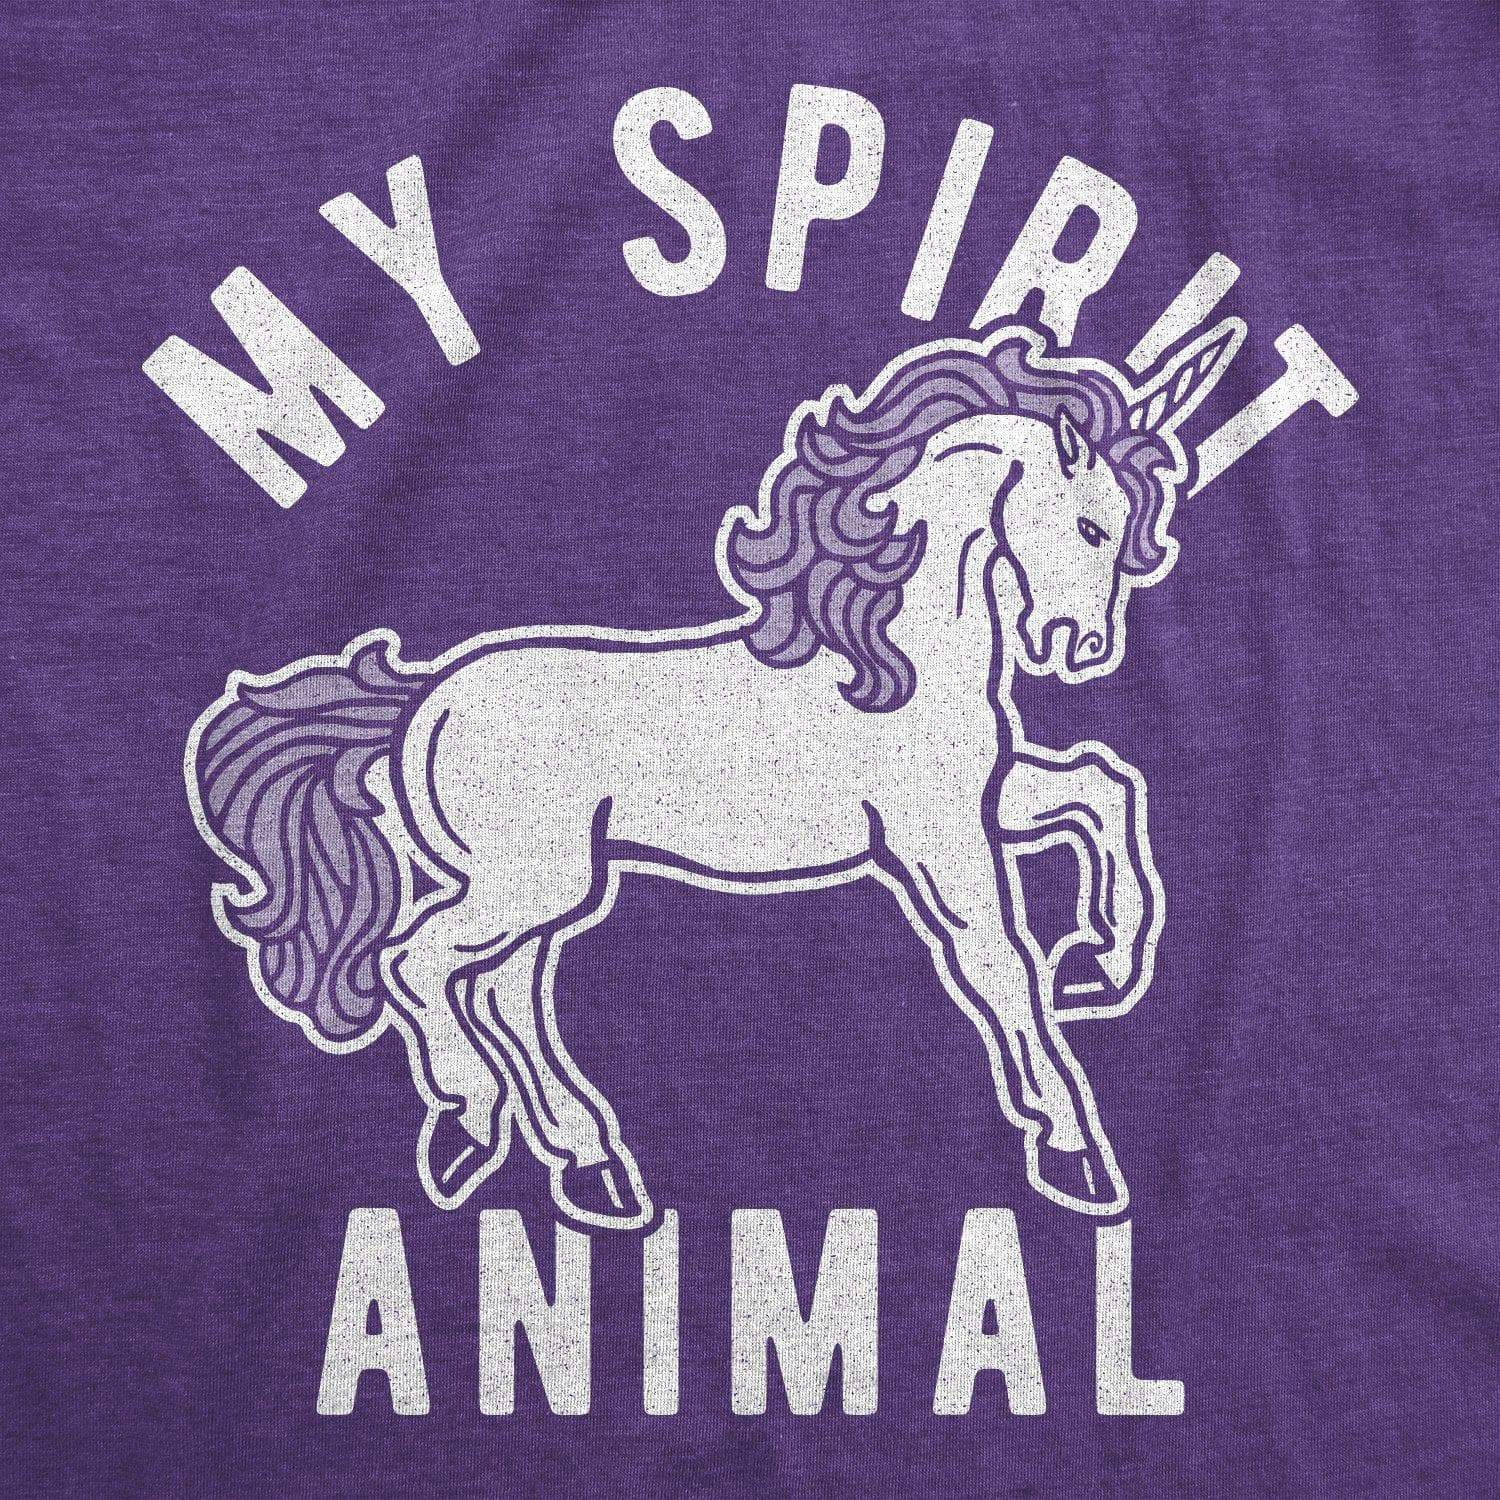 My Spirit Animal: Unicorn Women's Tshirt - Crazy Dog T-Shirts